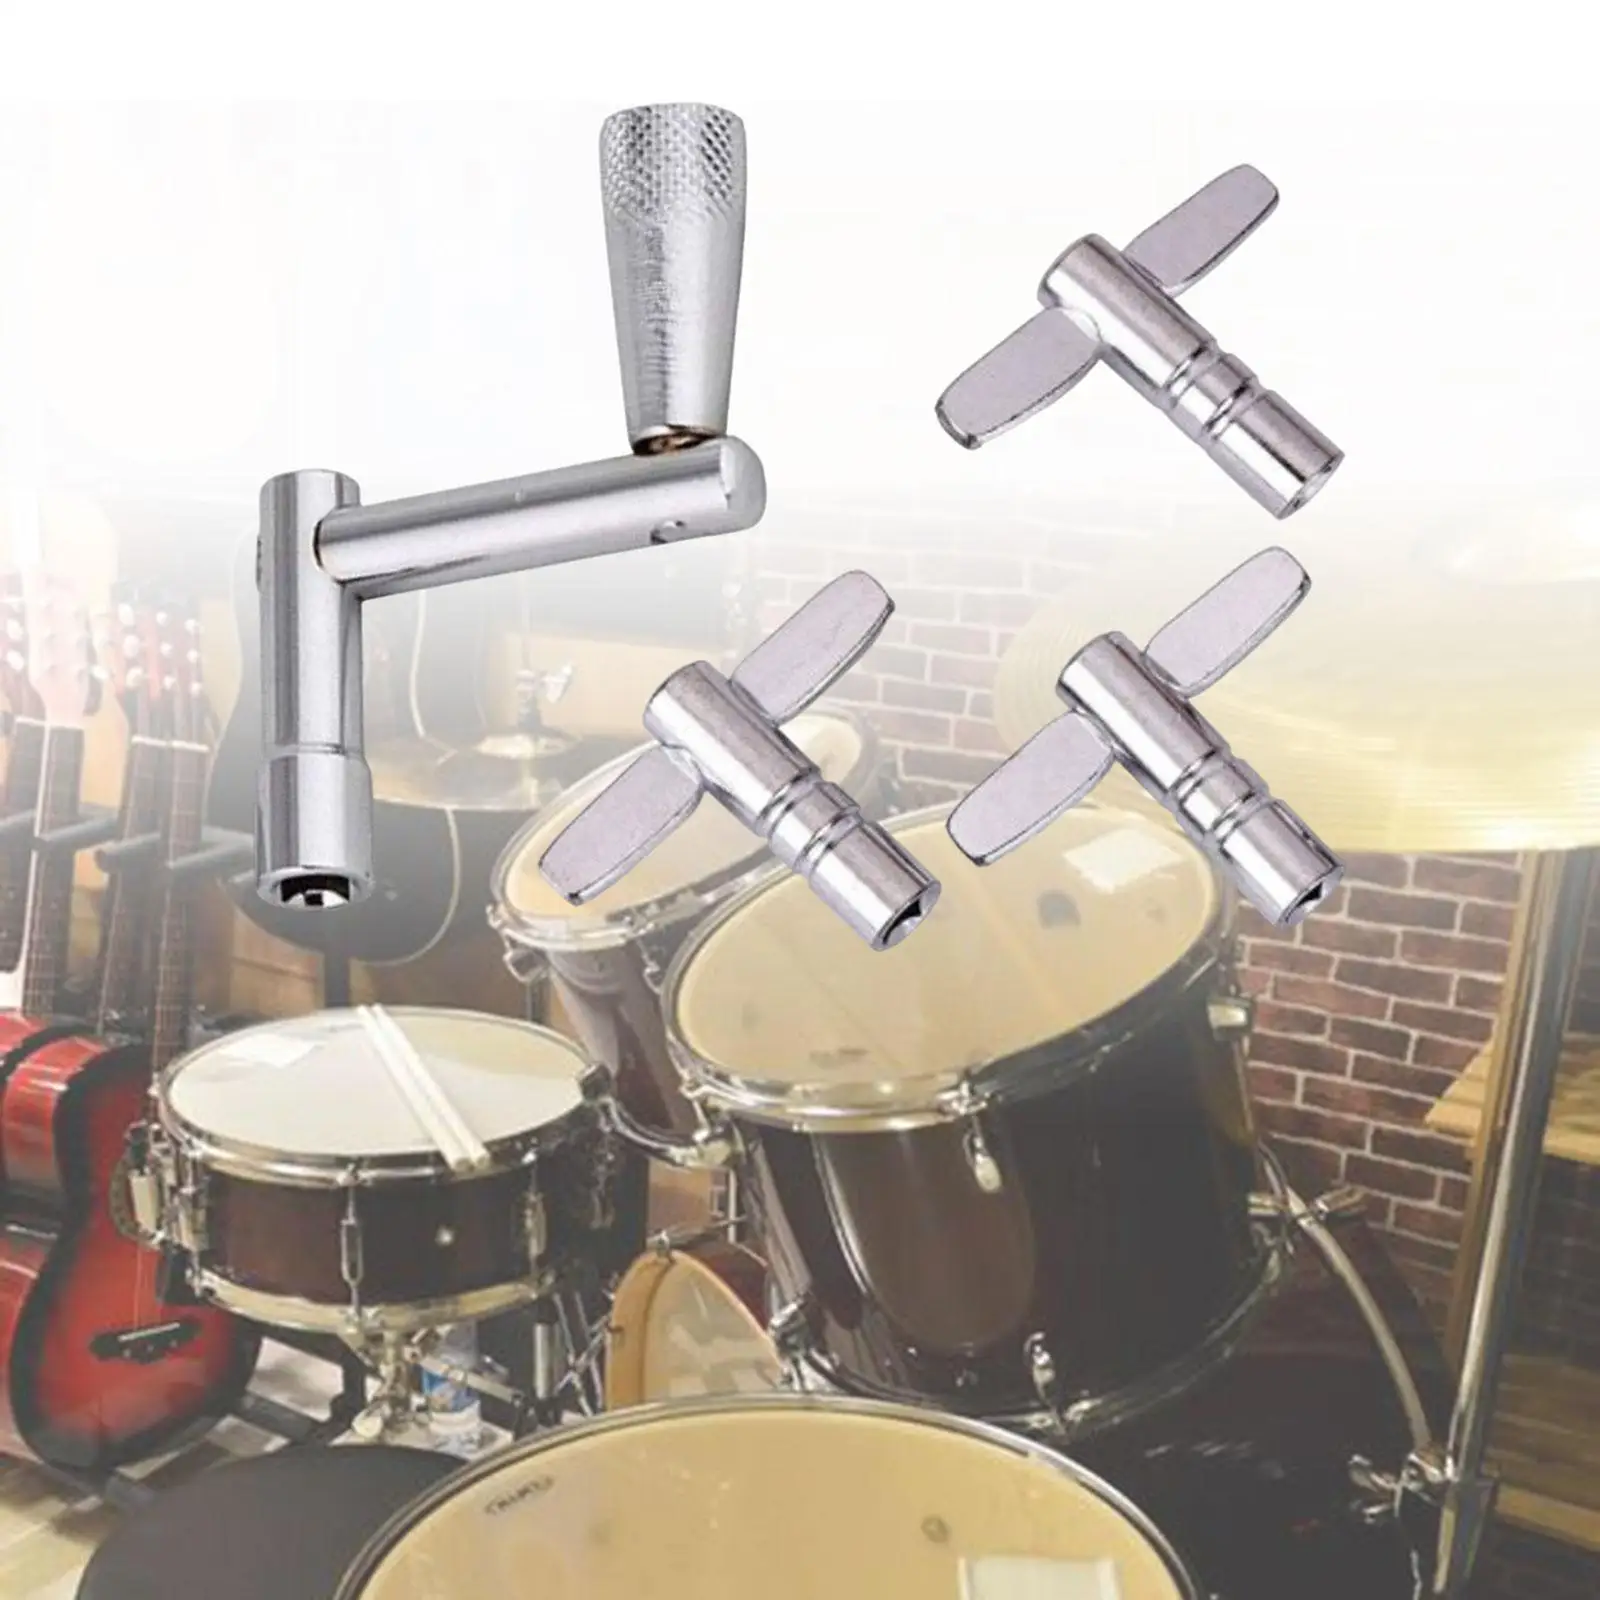 Alloy Drum Key Ergonomic Accessories Durable Drum Tuning Key Drum Adjusting Tool for Drummer